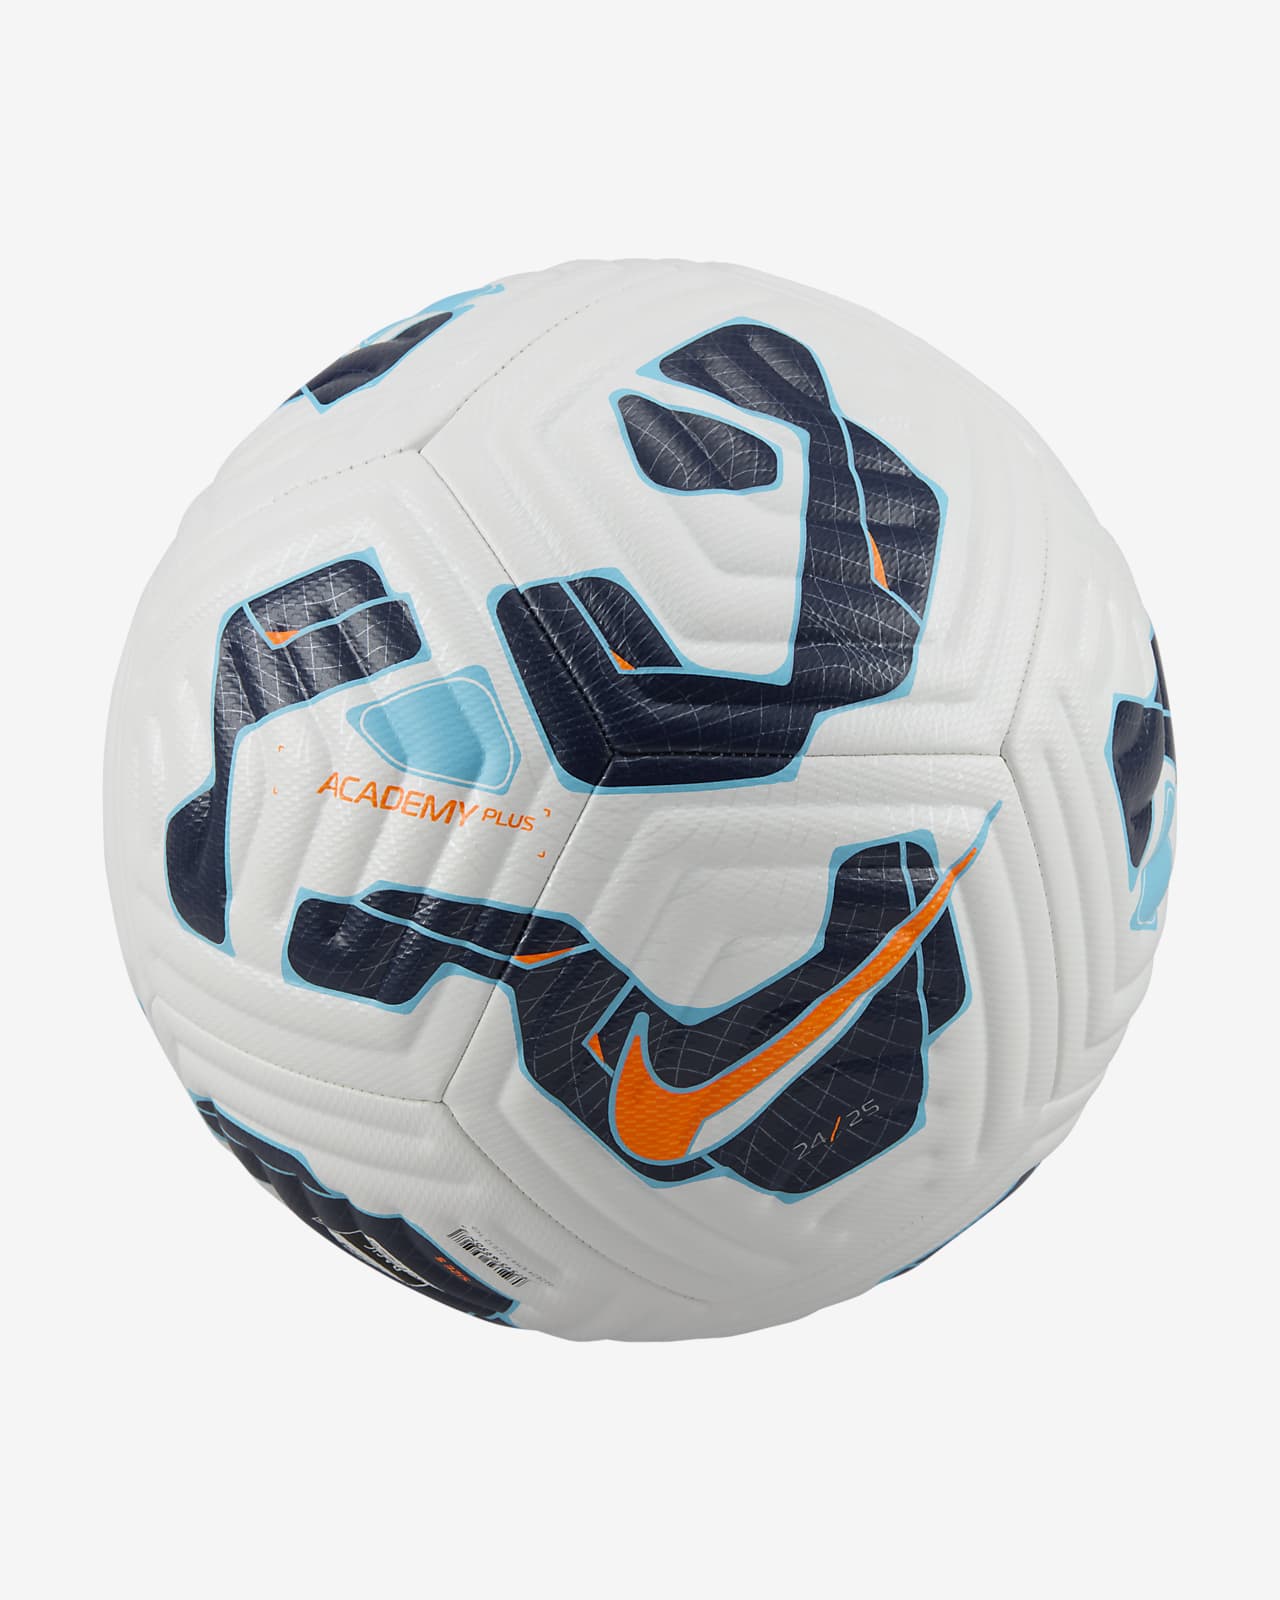 Nike Academy Plus Soccer Ball